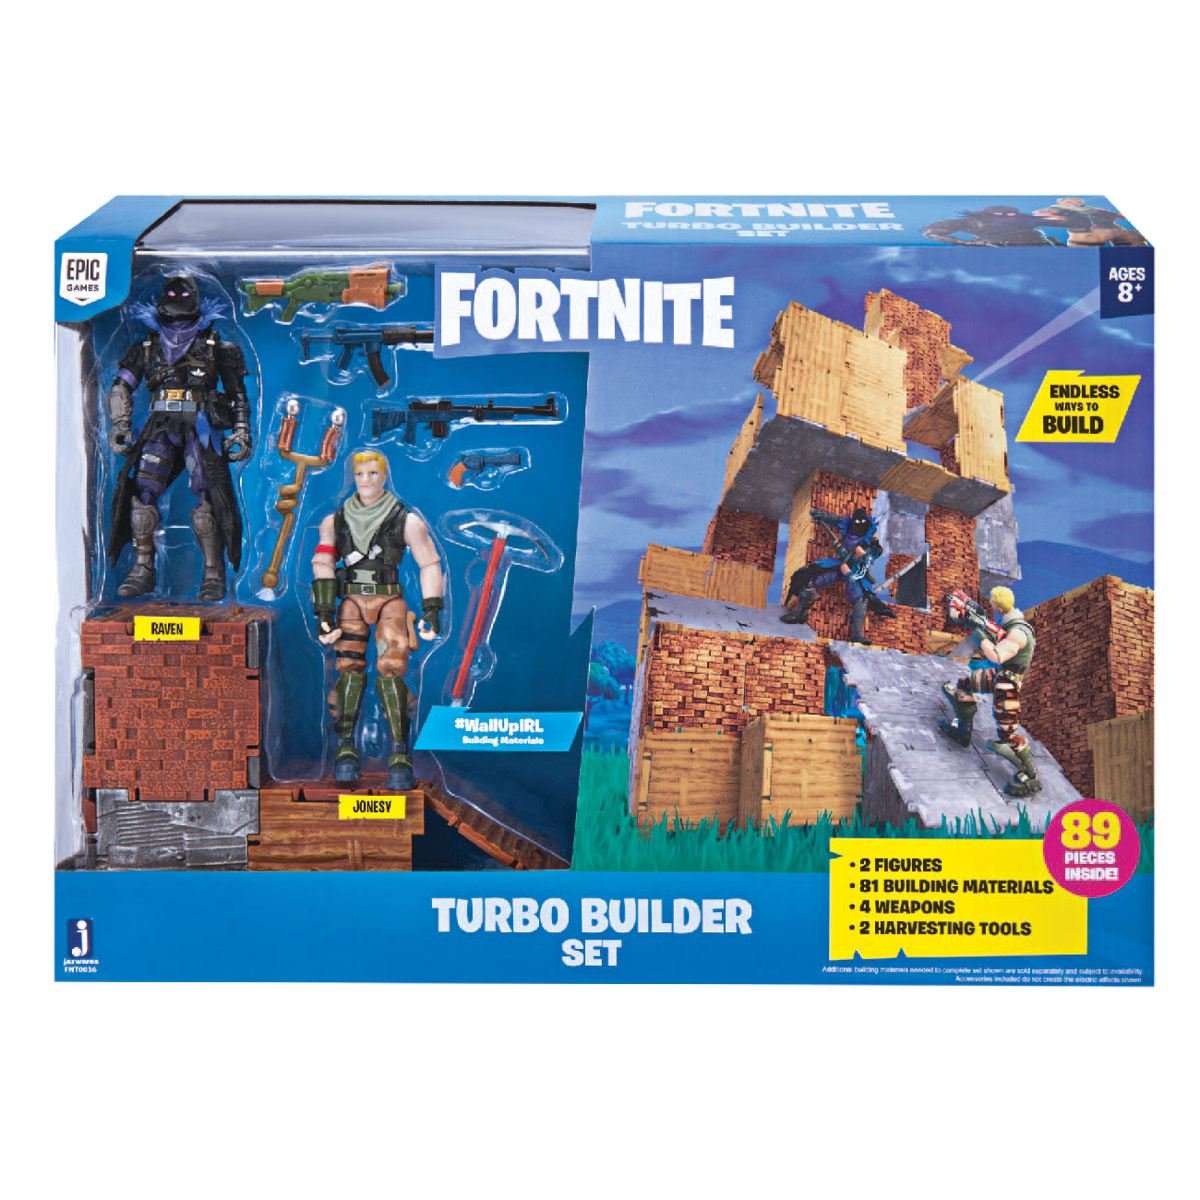 Set Fortnite "Turbo Builder" con accesorios